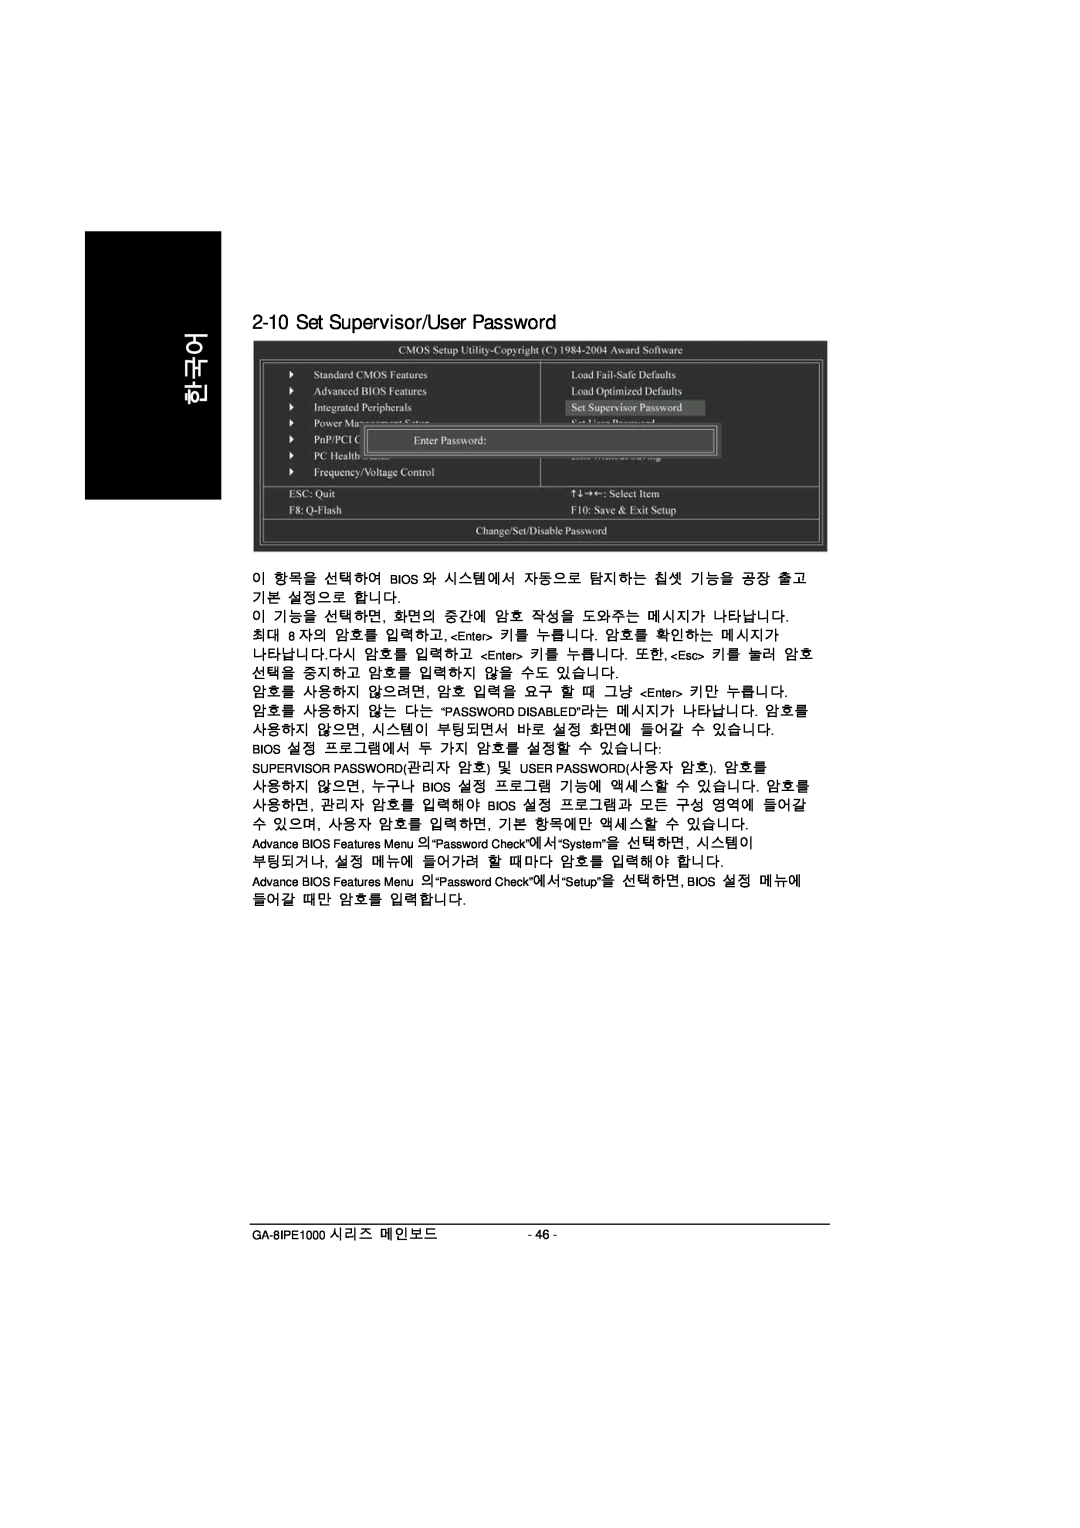 Intel GA-8IPE1000 manual Set Supervisor/User Password 